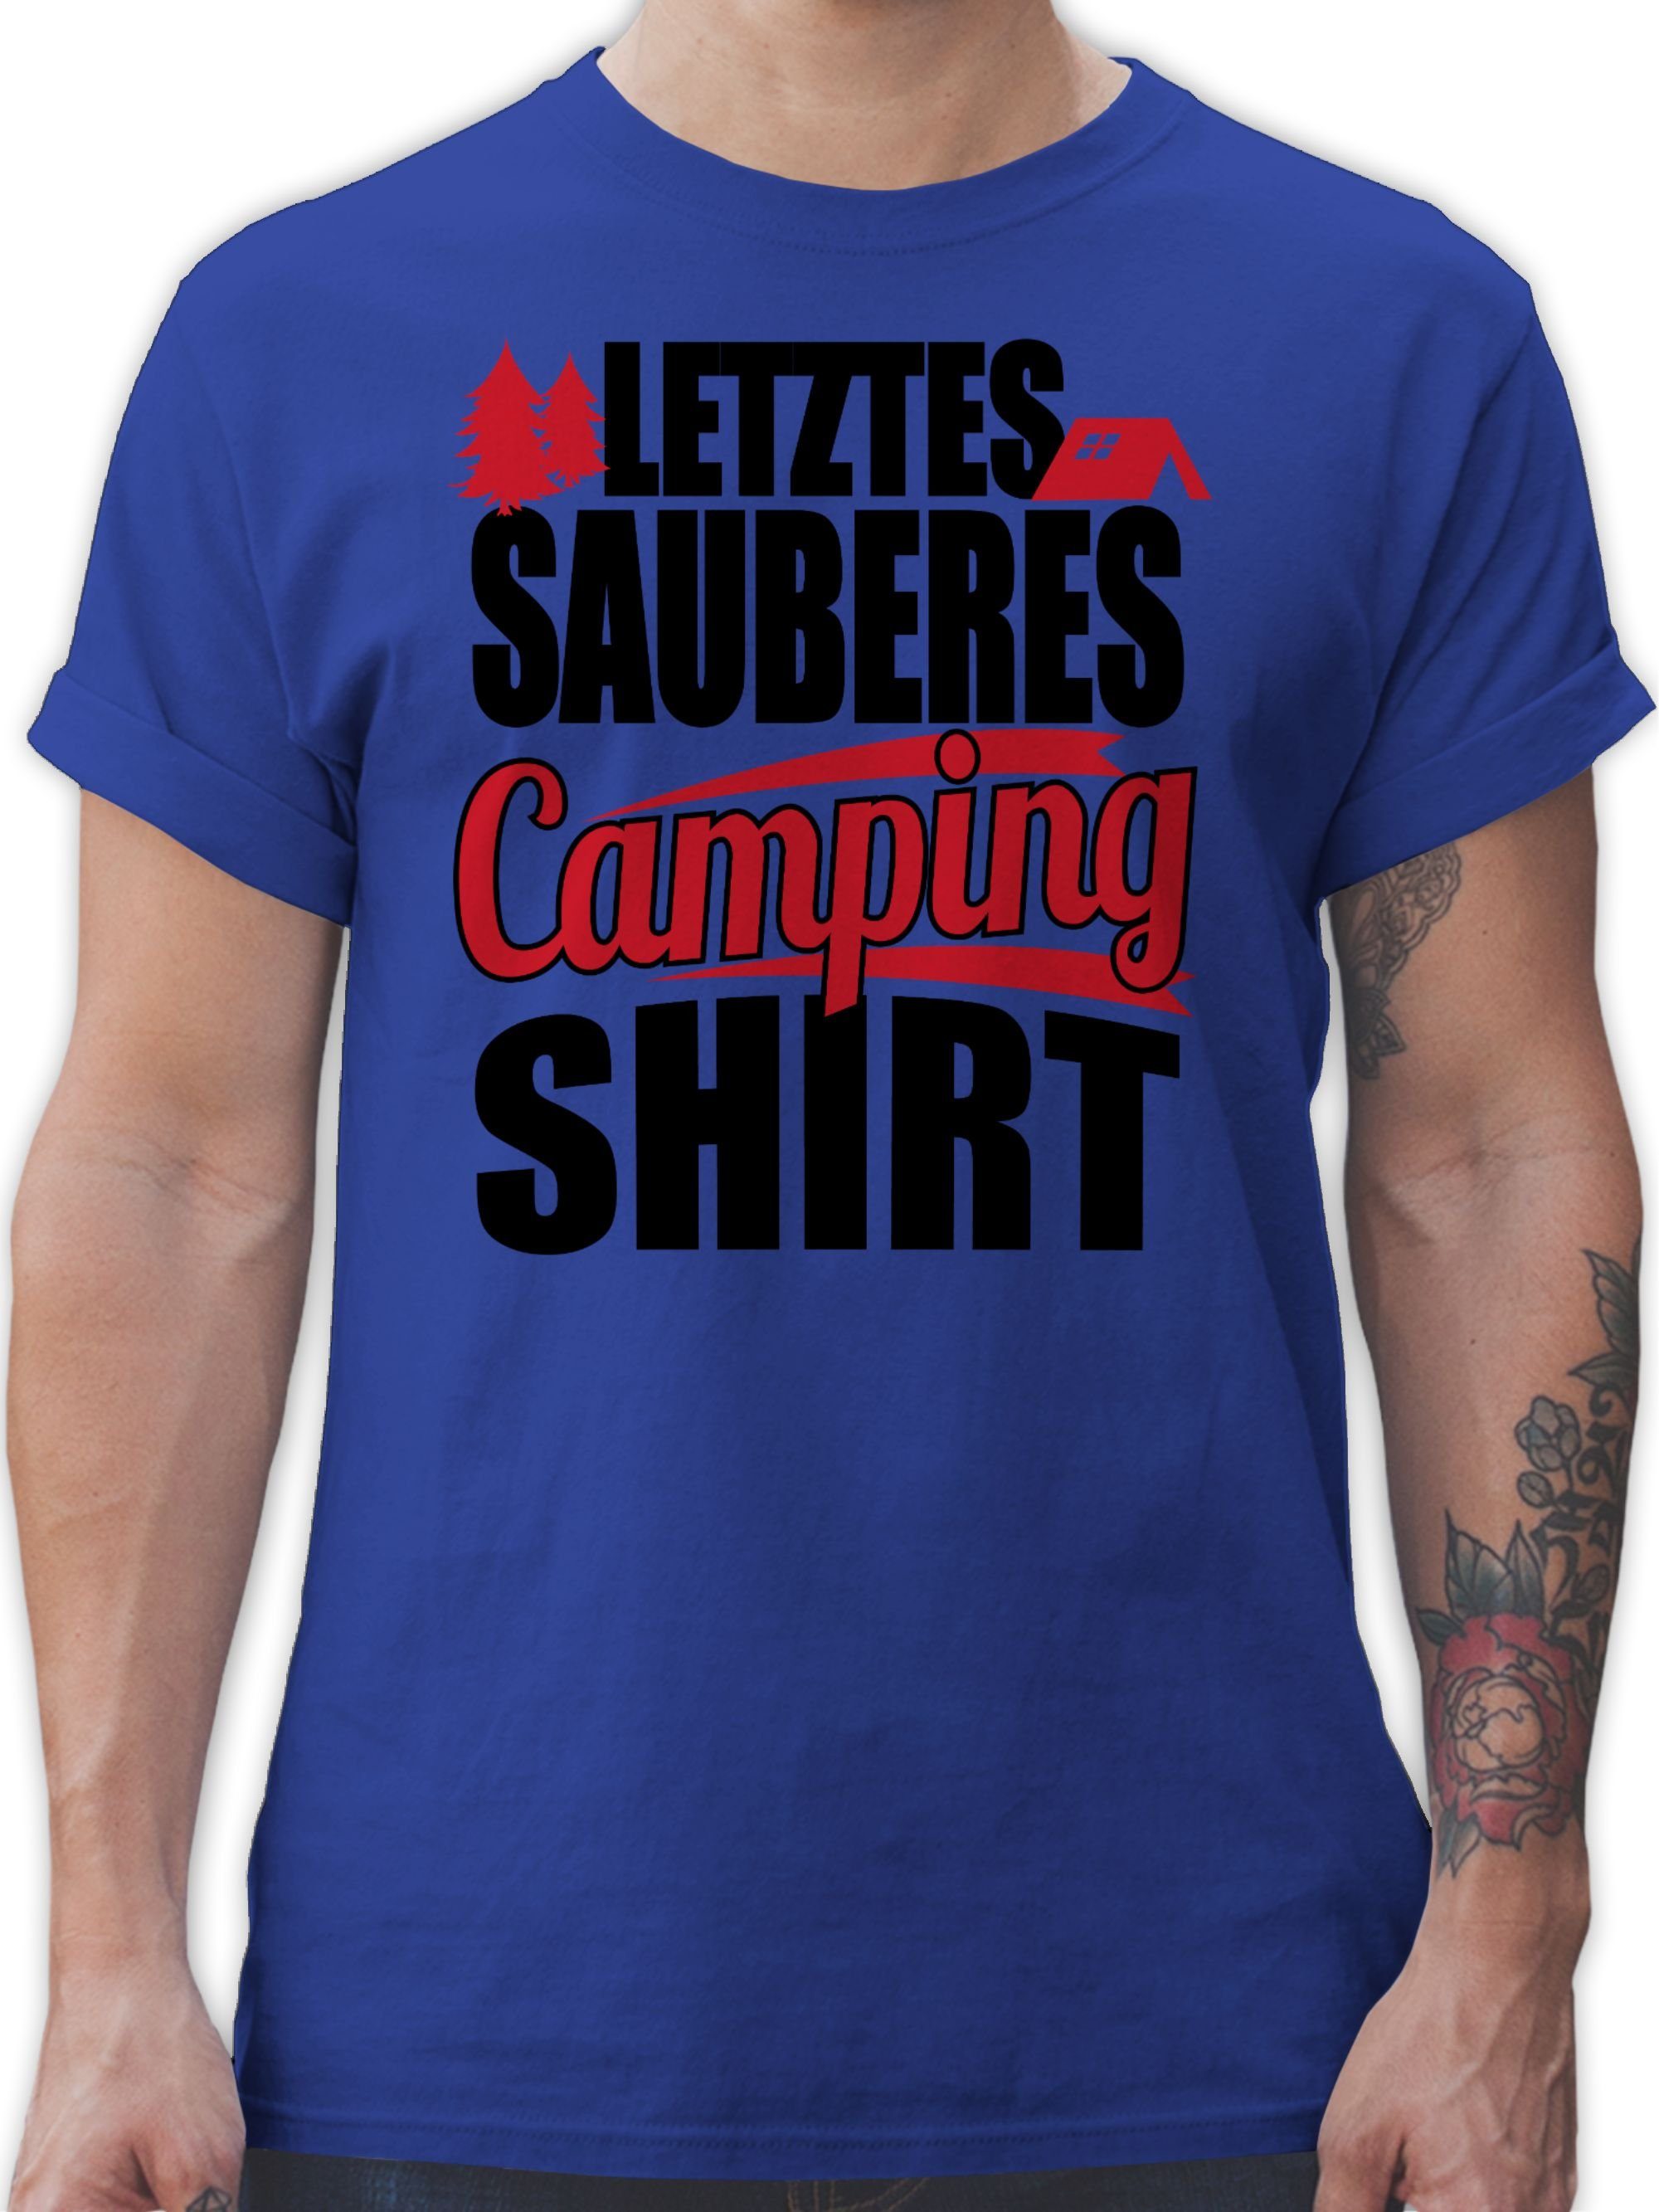 Shirtracer Hobby sauberes T-Shirt schwarz Outfit Camping 3 Shirt Letztes Royalblau